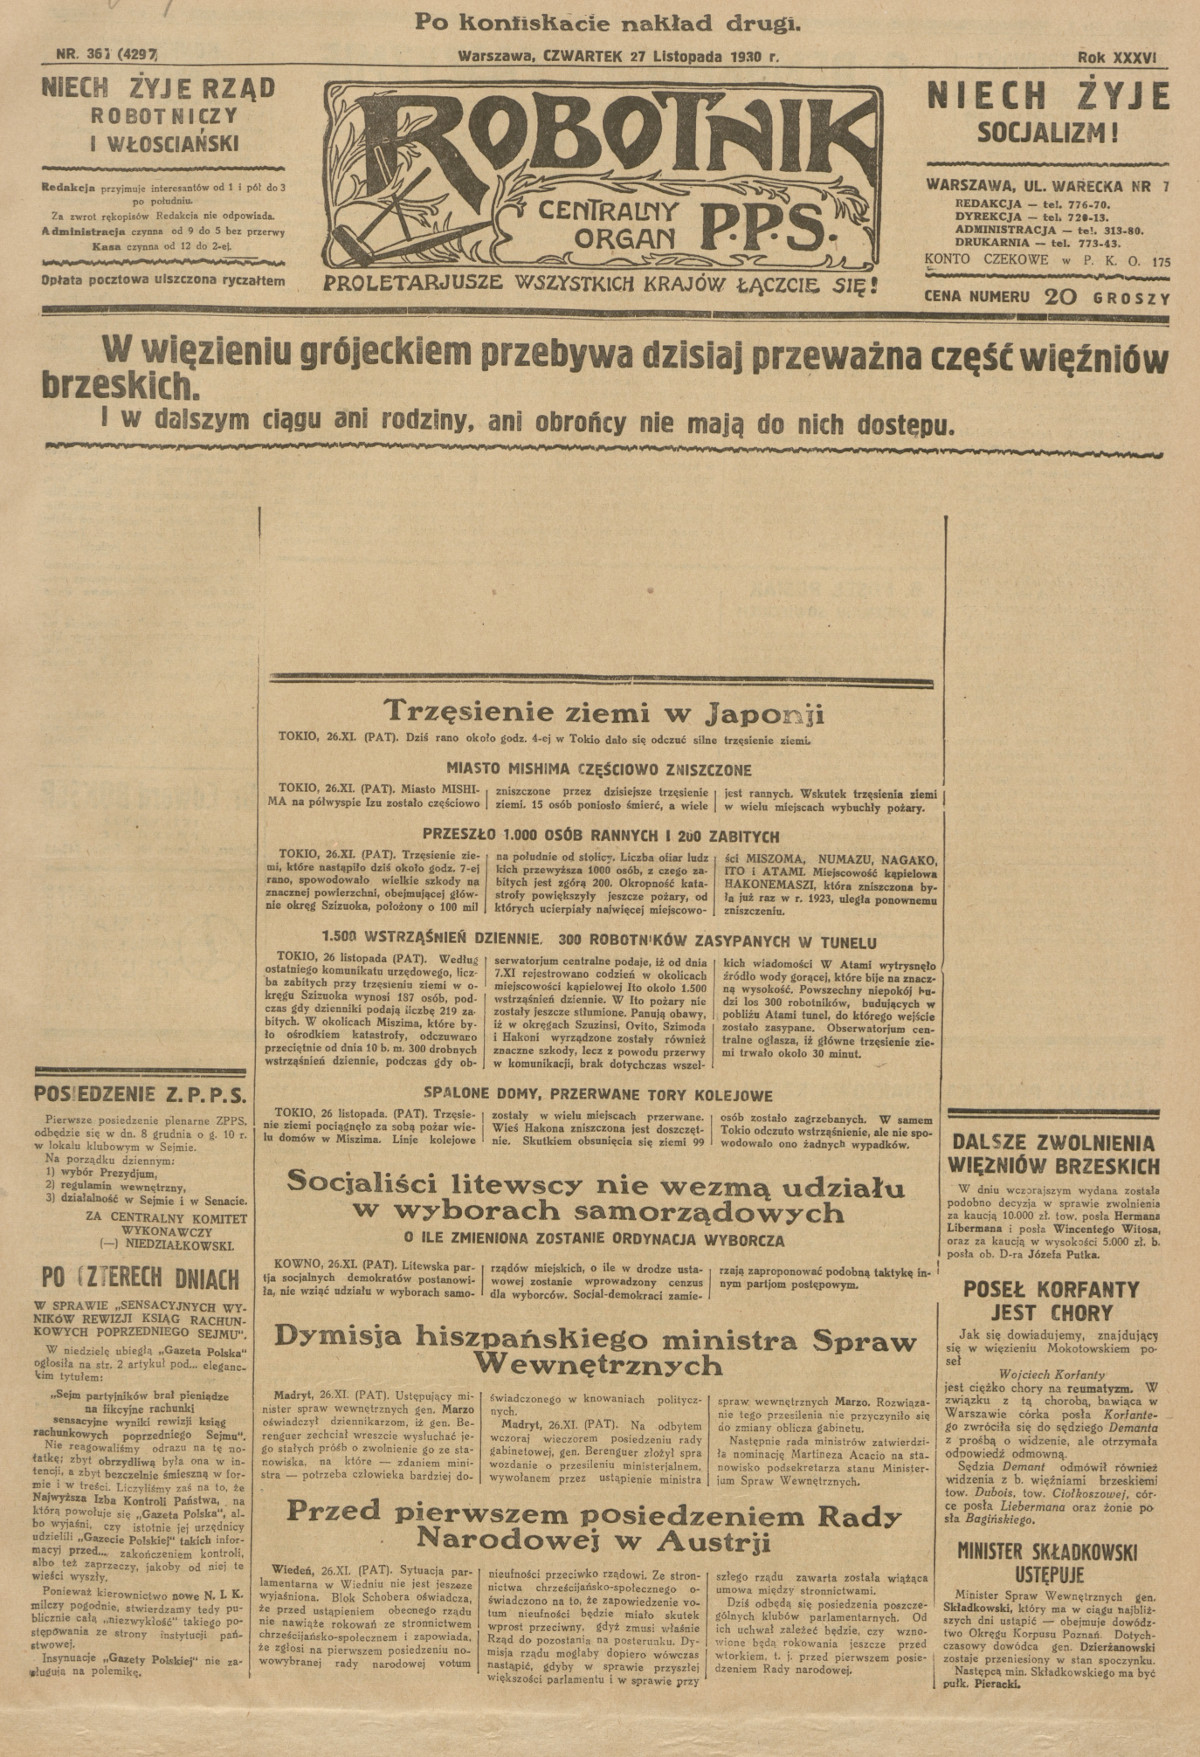 Robotnik   centralny organ P.P.S. 27 listopada 1930.jpg